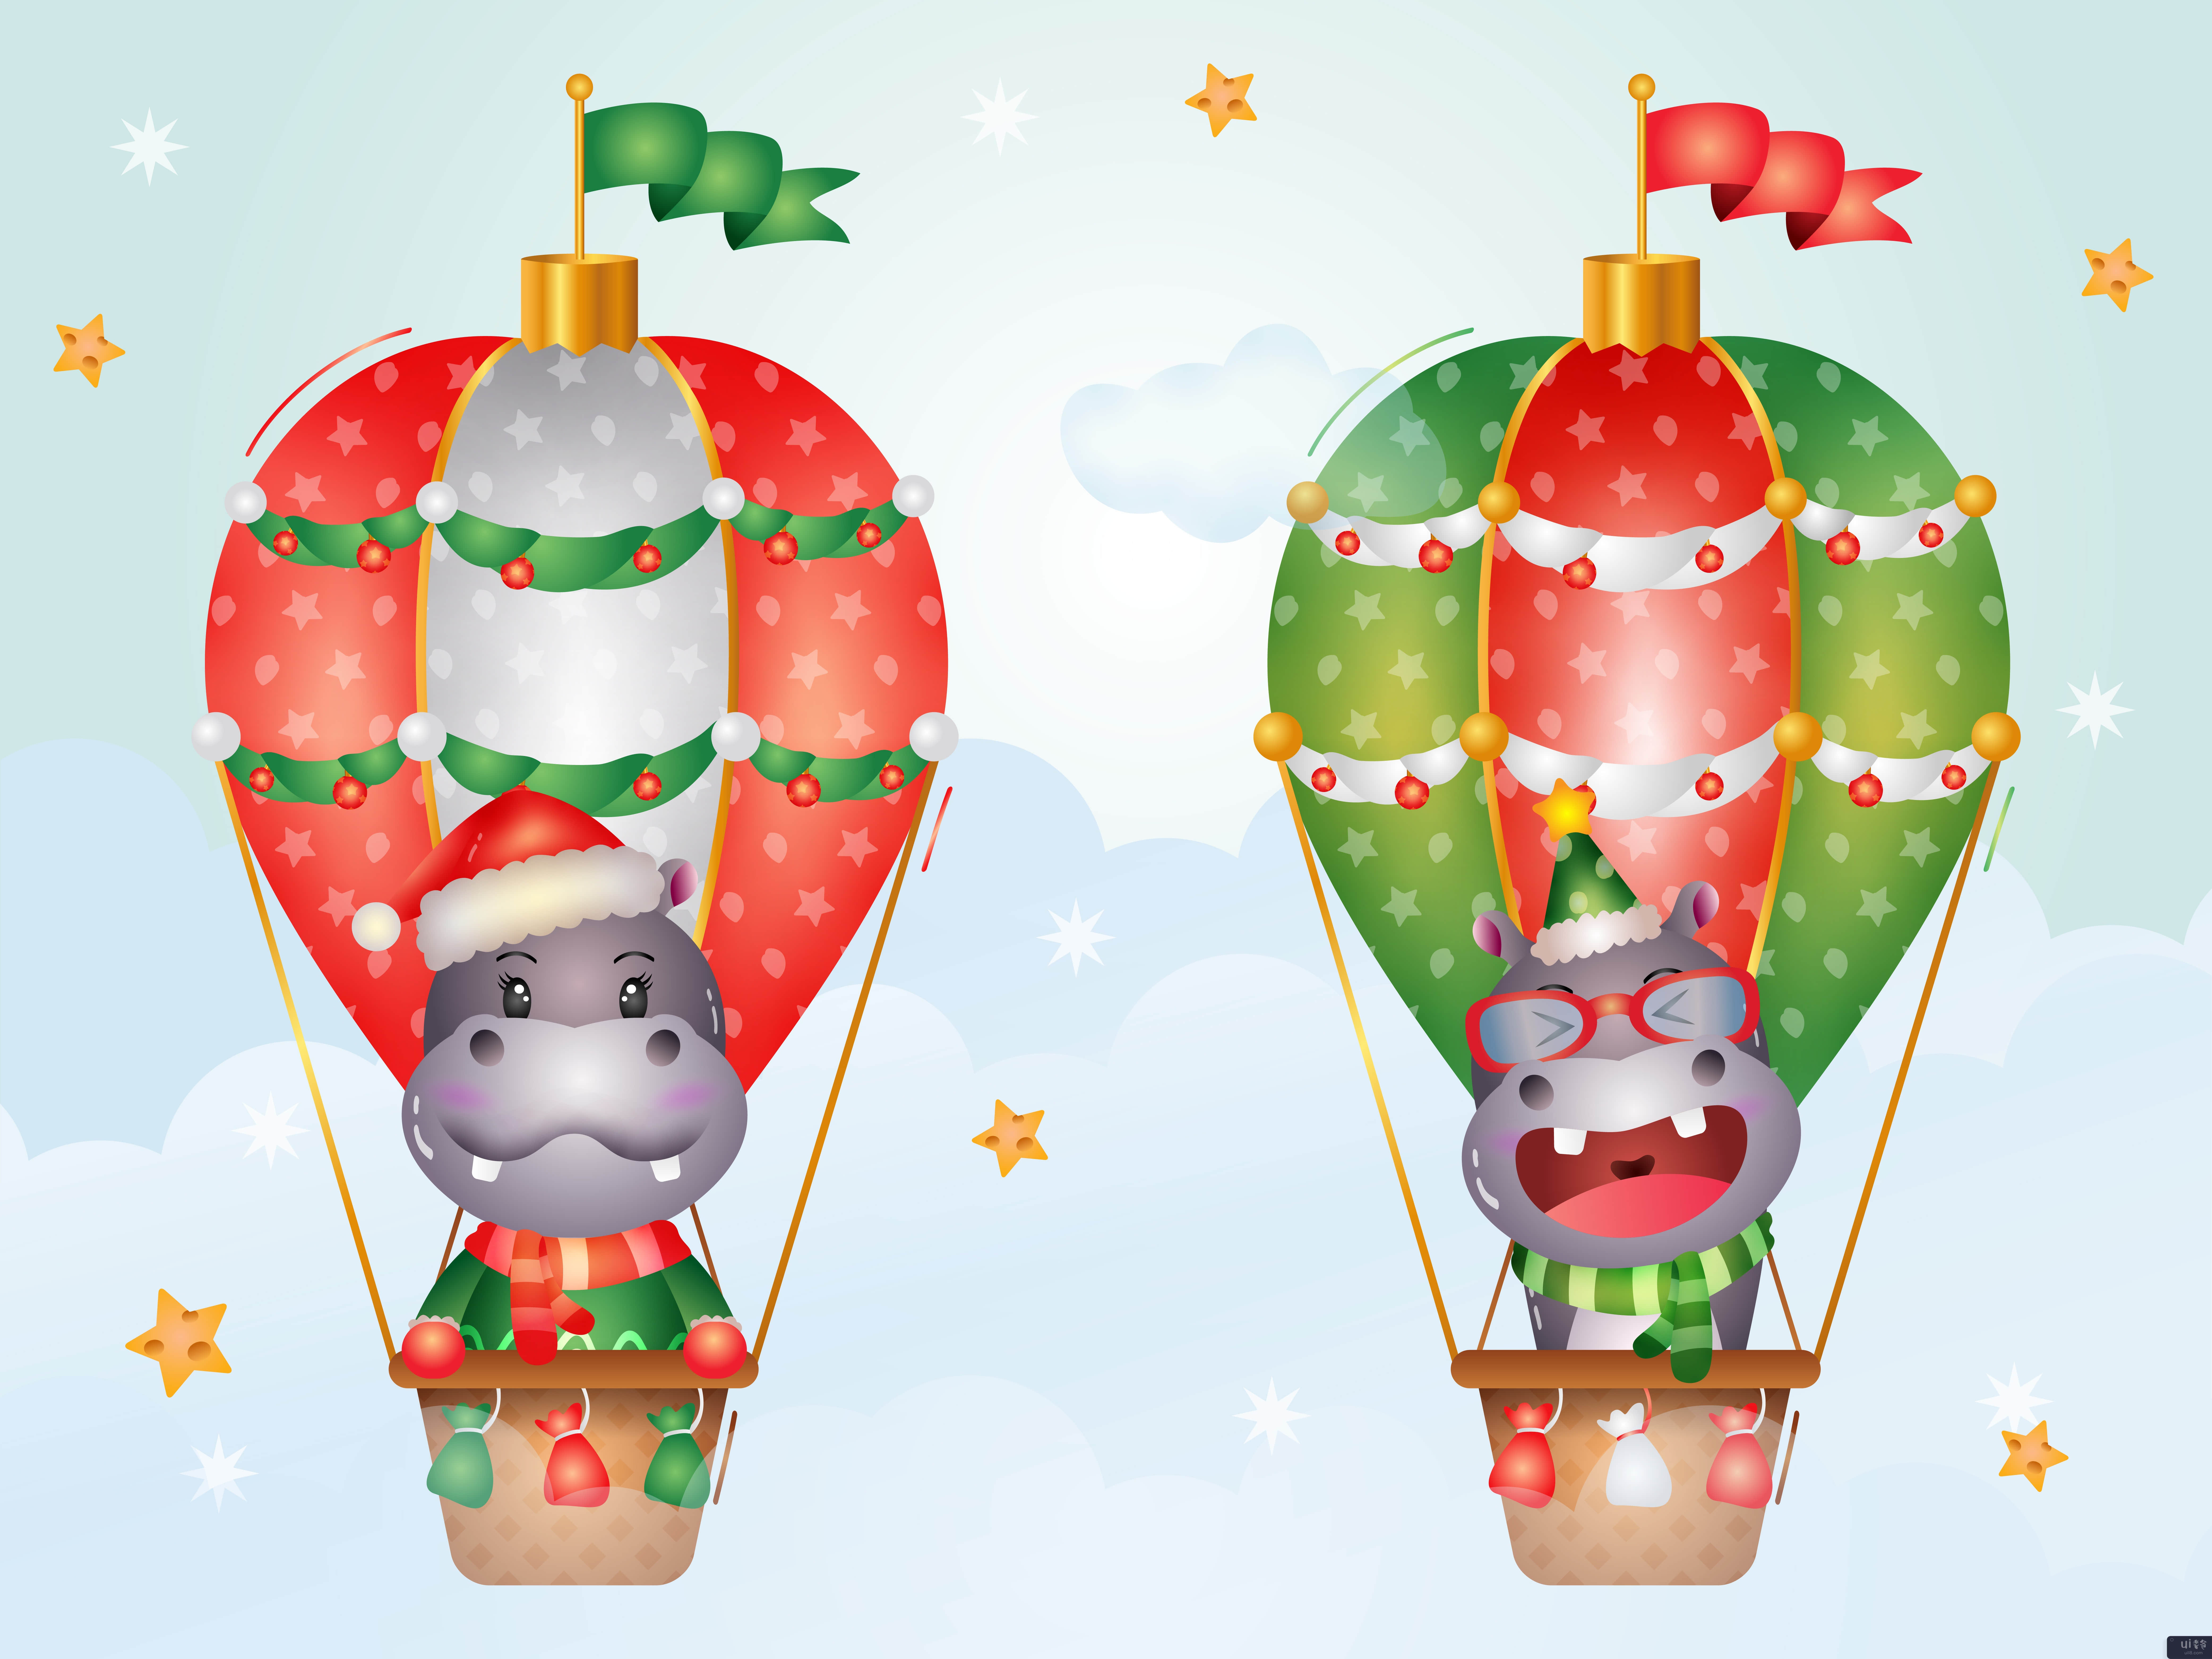 热气球上可爱的河马圣诞人物(Cute hippo christmas characters on hot air balloon)插图